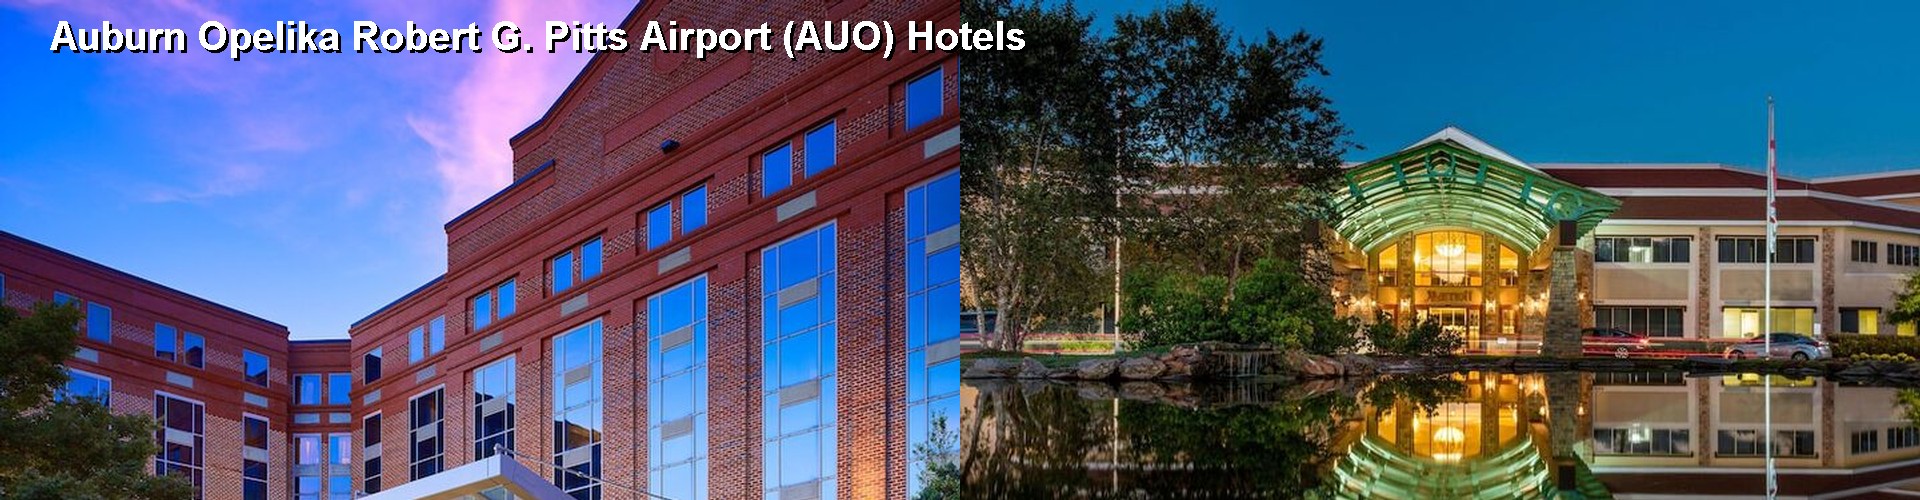 5 Best Hotels near Auburn Opelika Robert G. Pitts Airport (AUO)